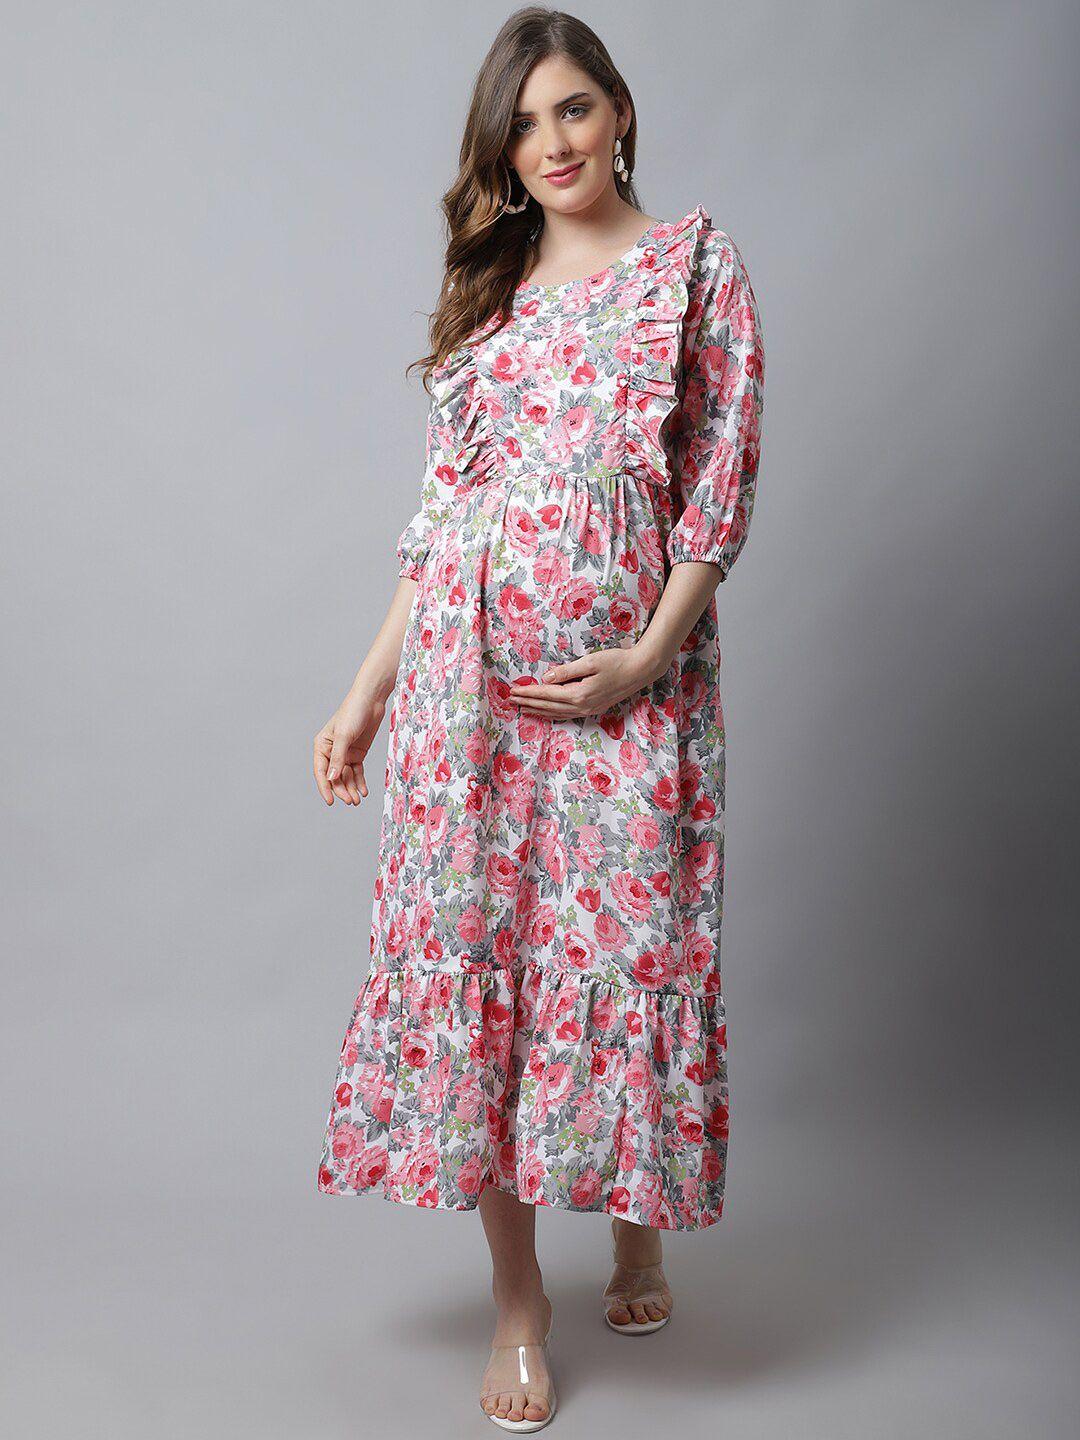 frempy floral print puff sleeve ruffled crepe maternity a-line midi dress